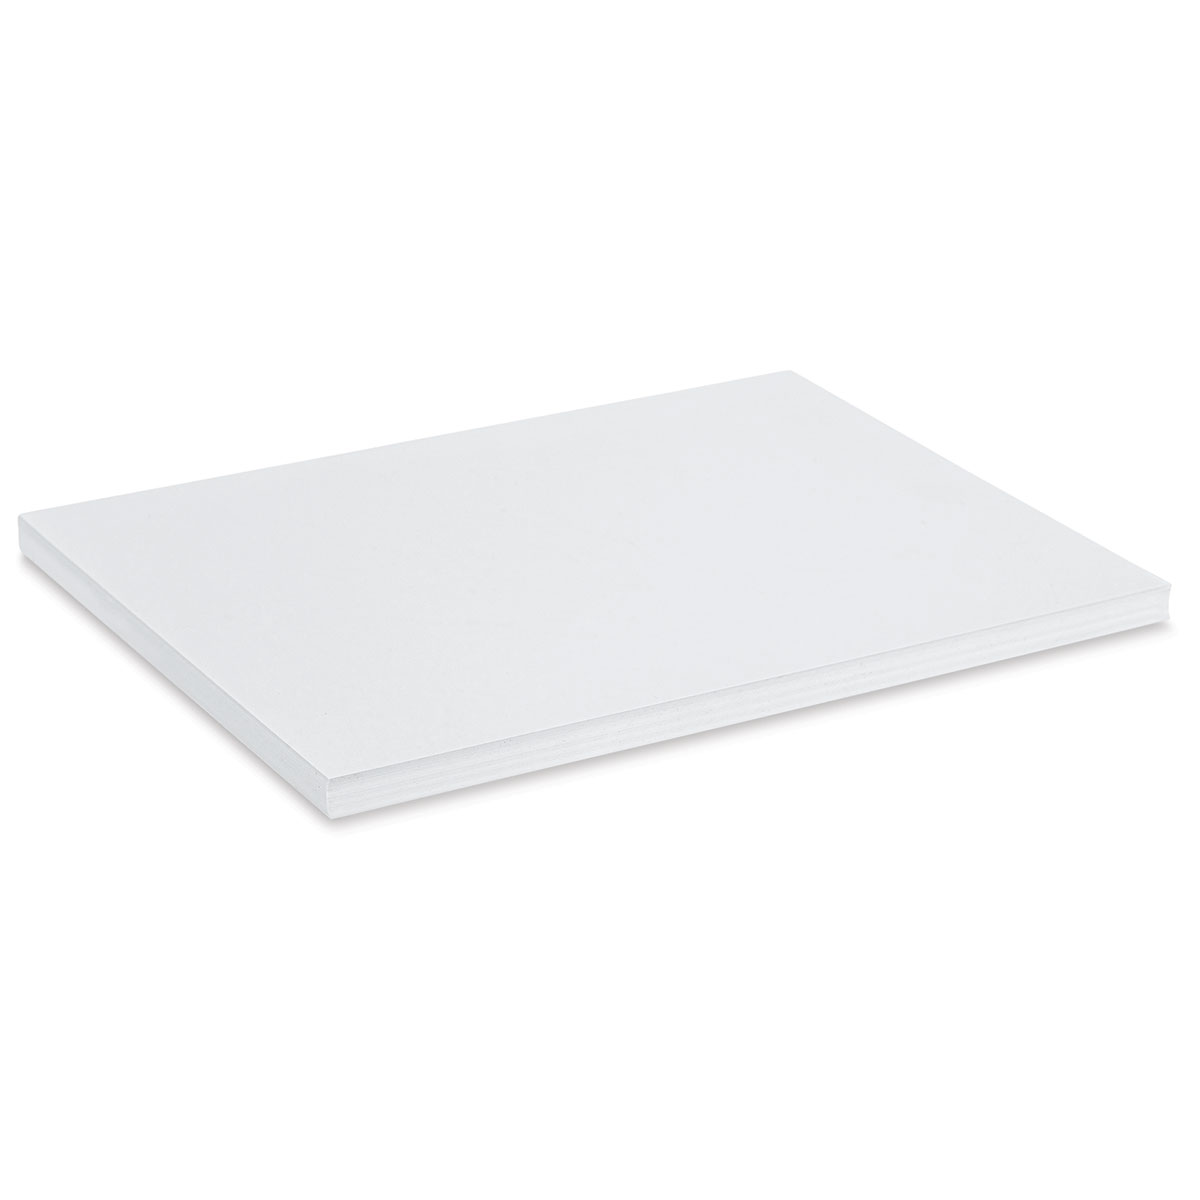 Yupo Paper Pad - 10/Sheets - 104lb Transparent (view sizes)